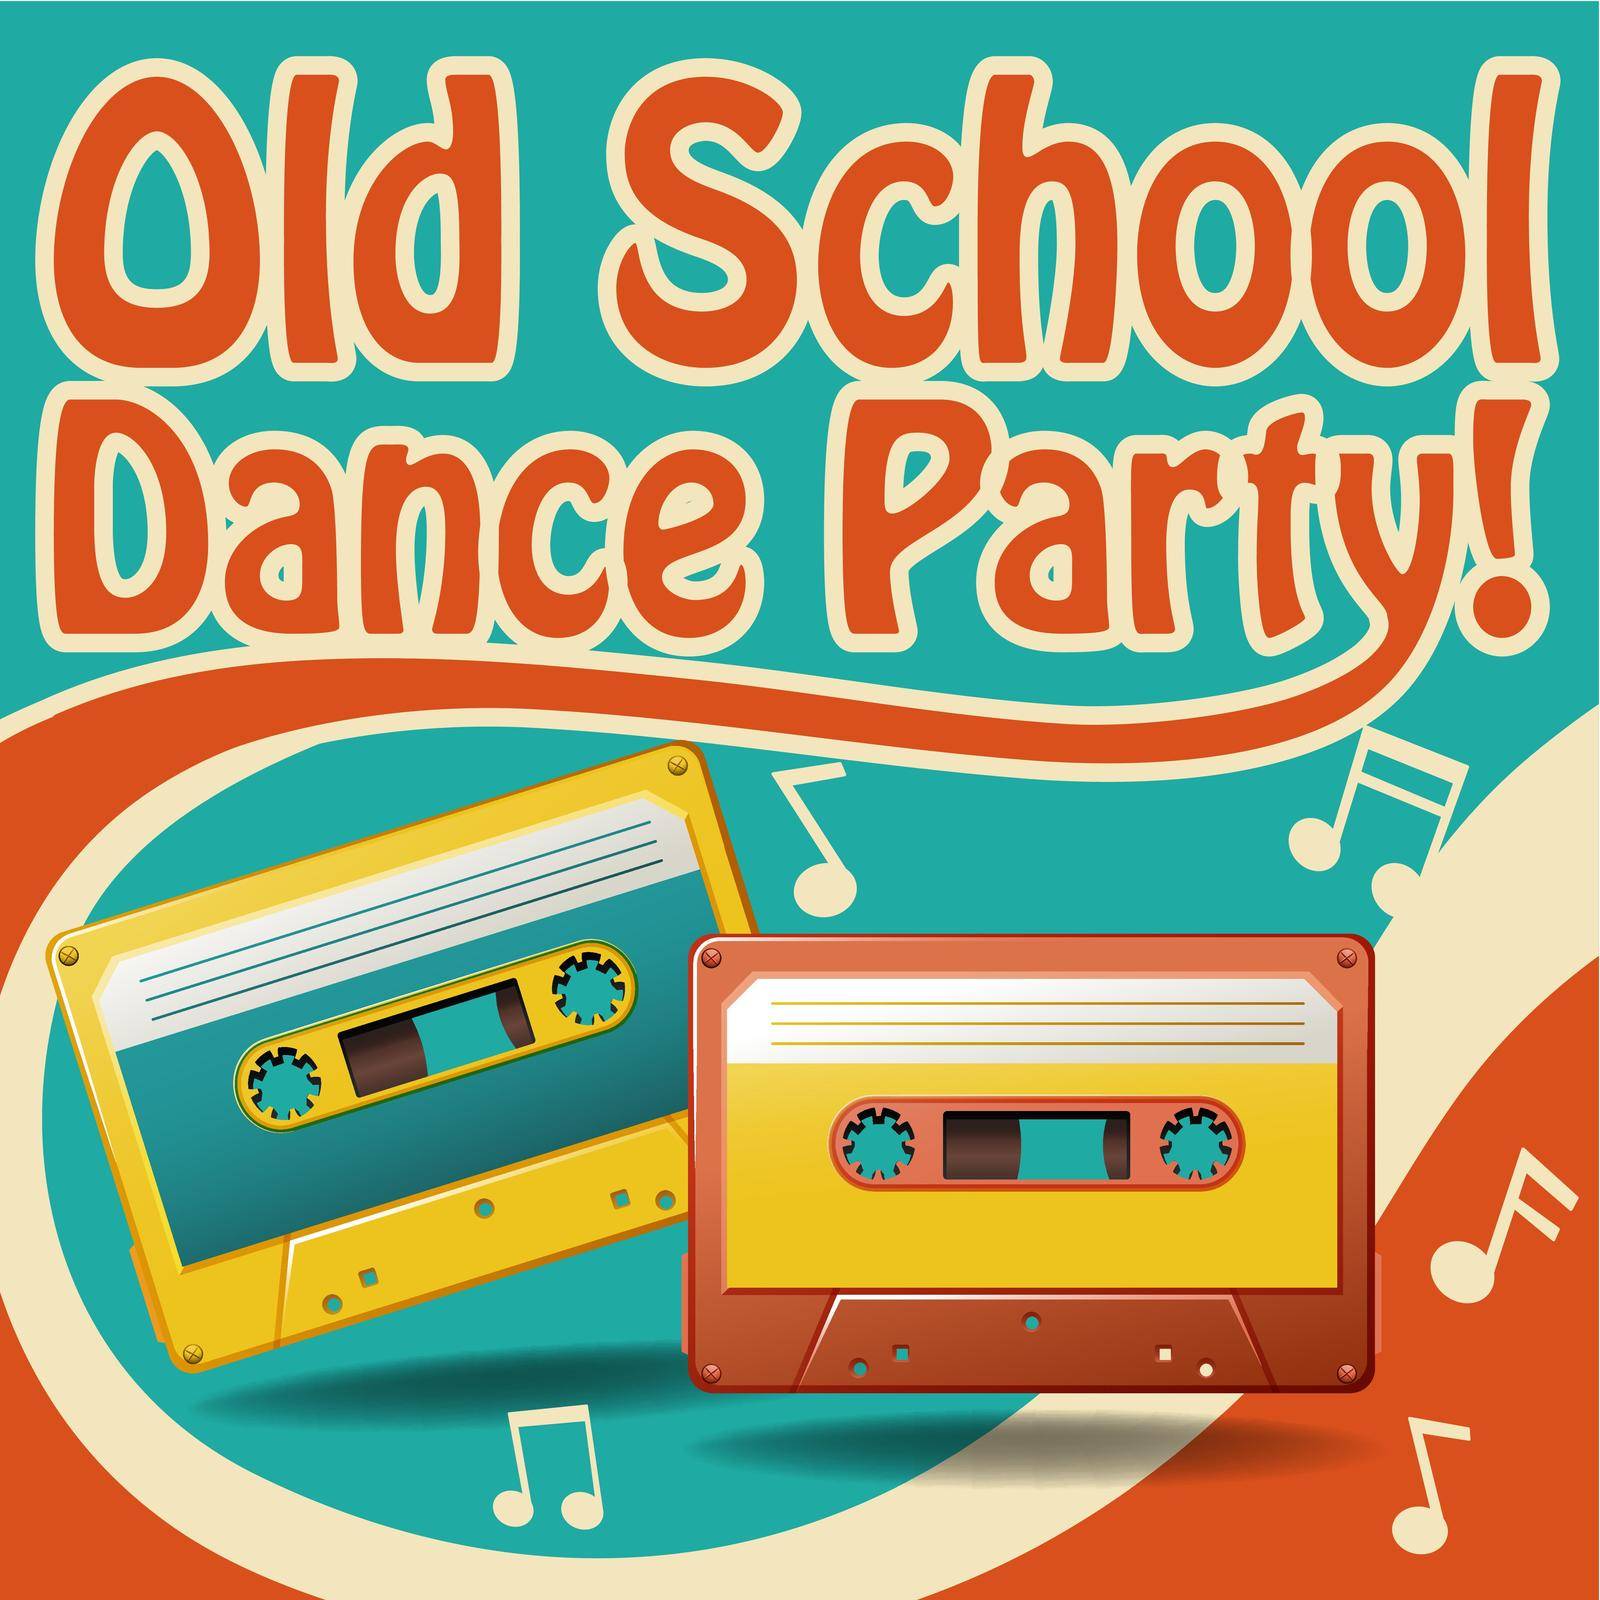 Old school dance party poster in retro design